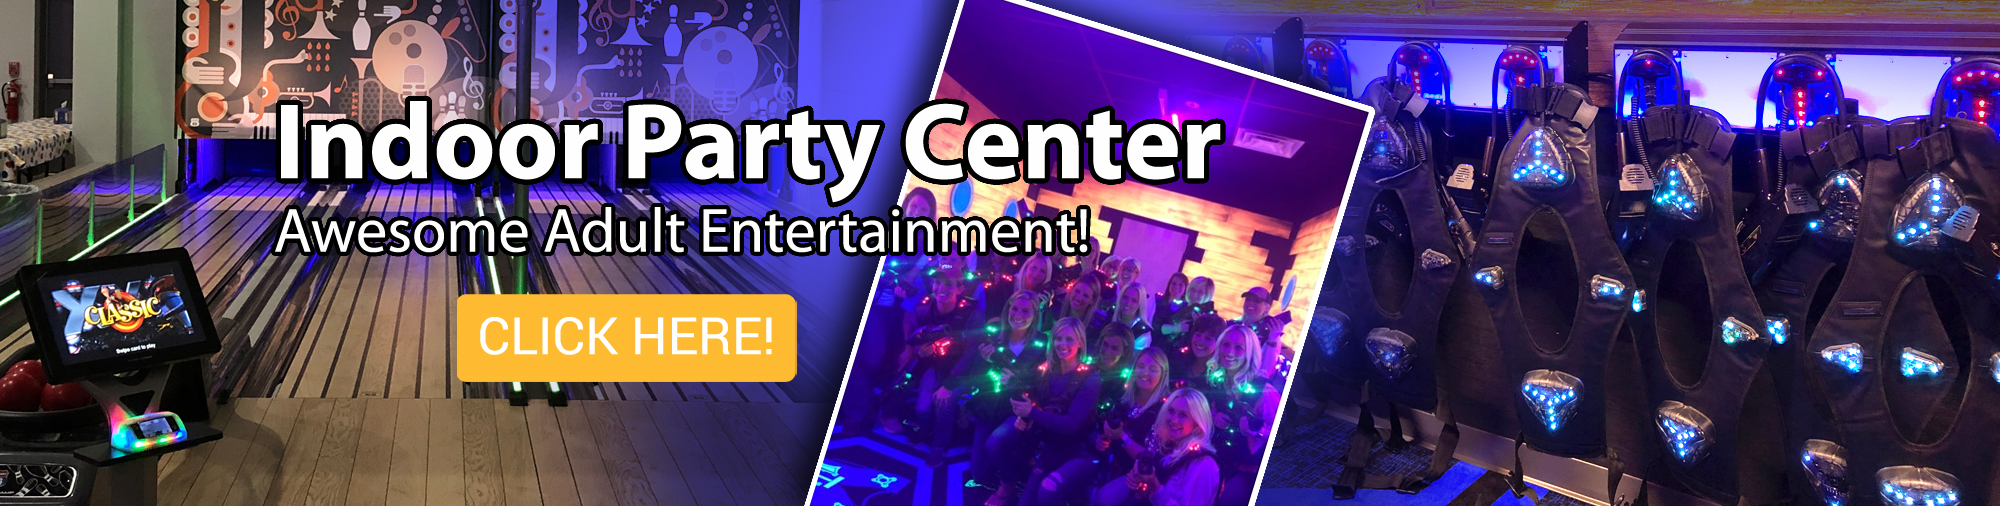 Indoor Party Center